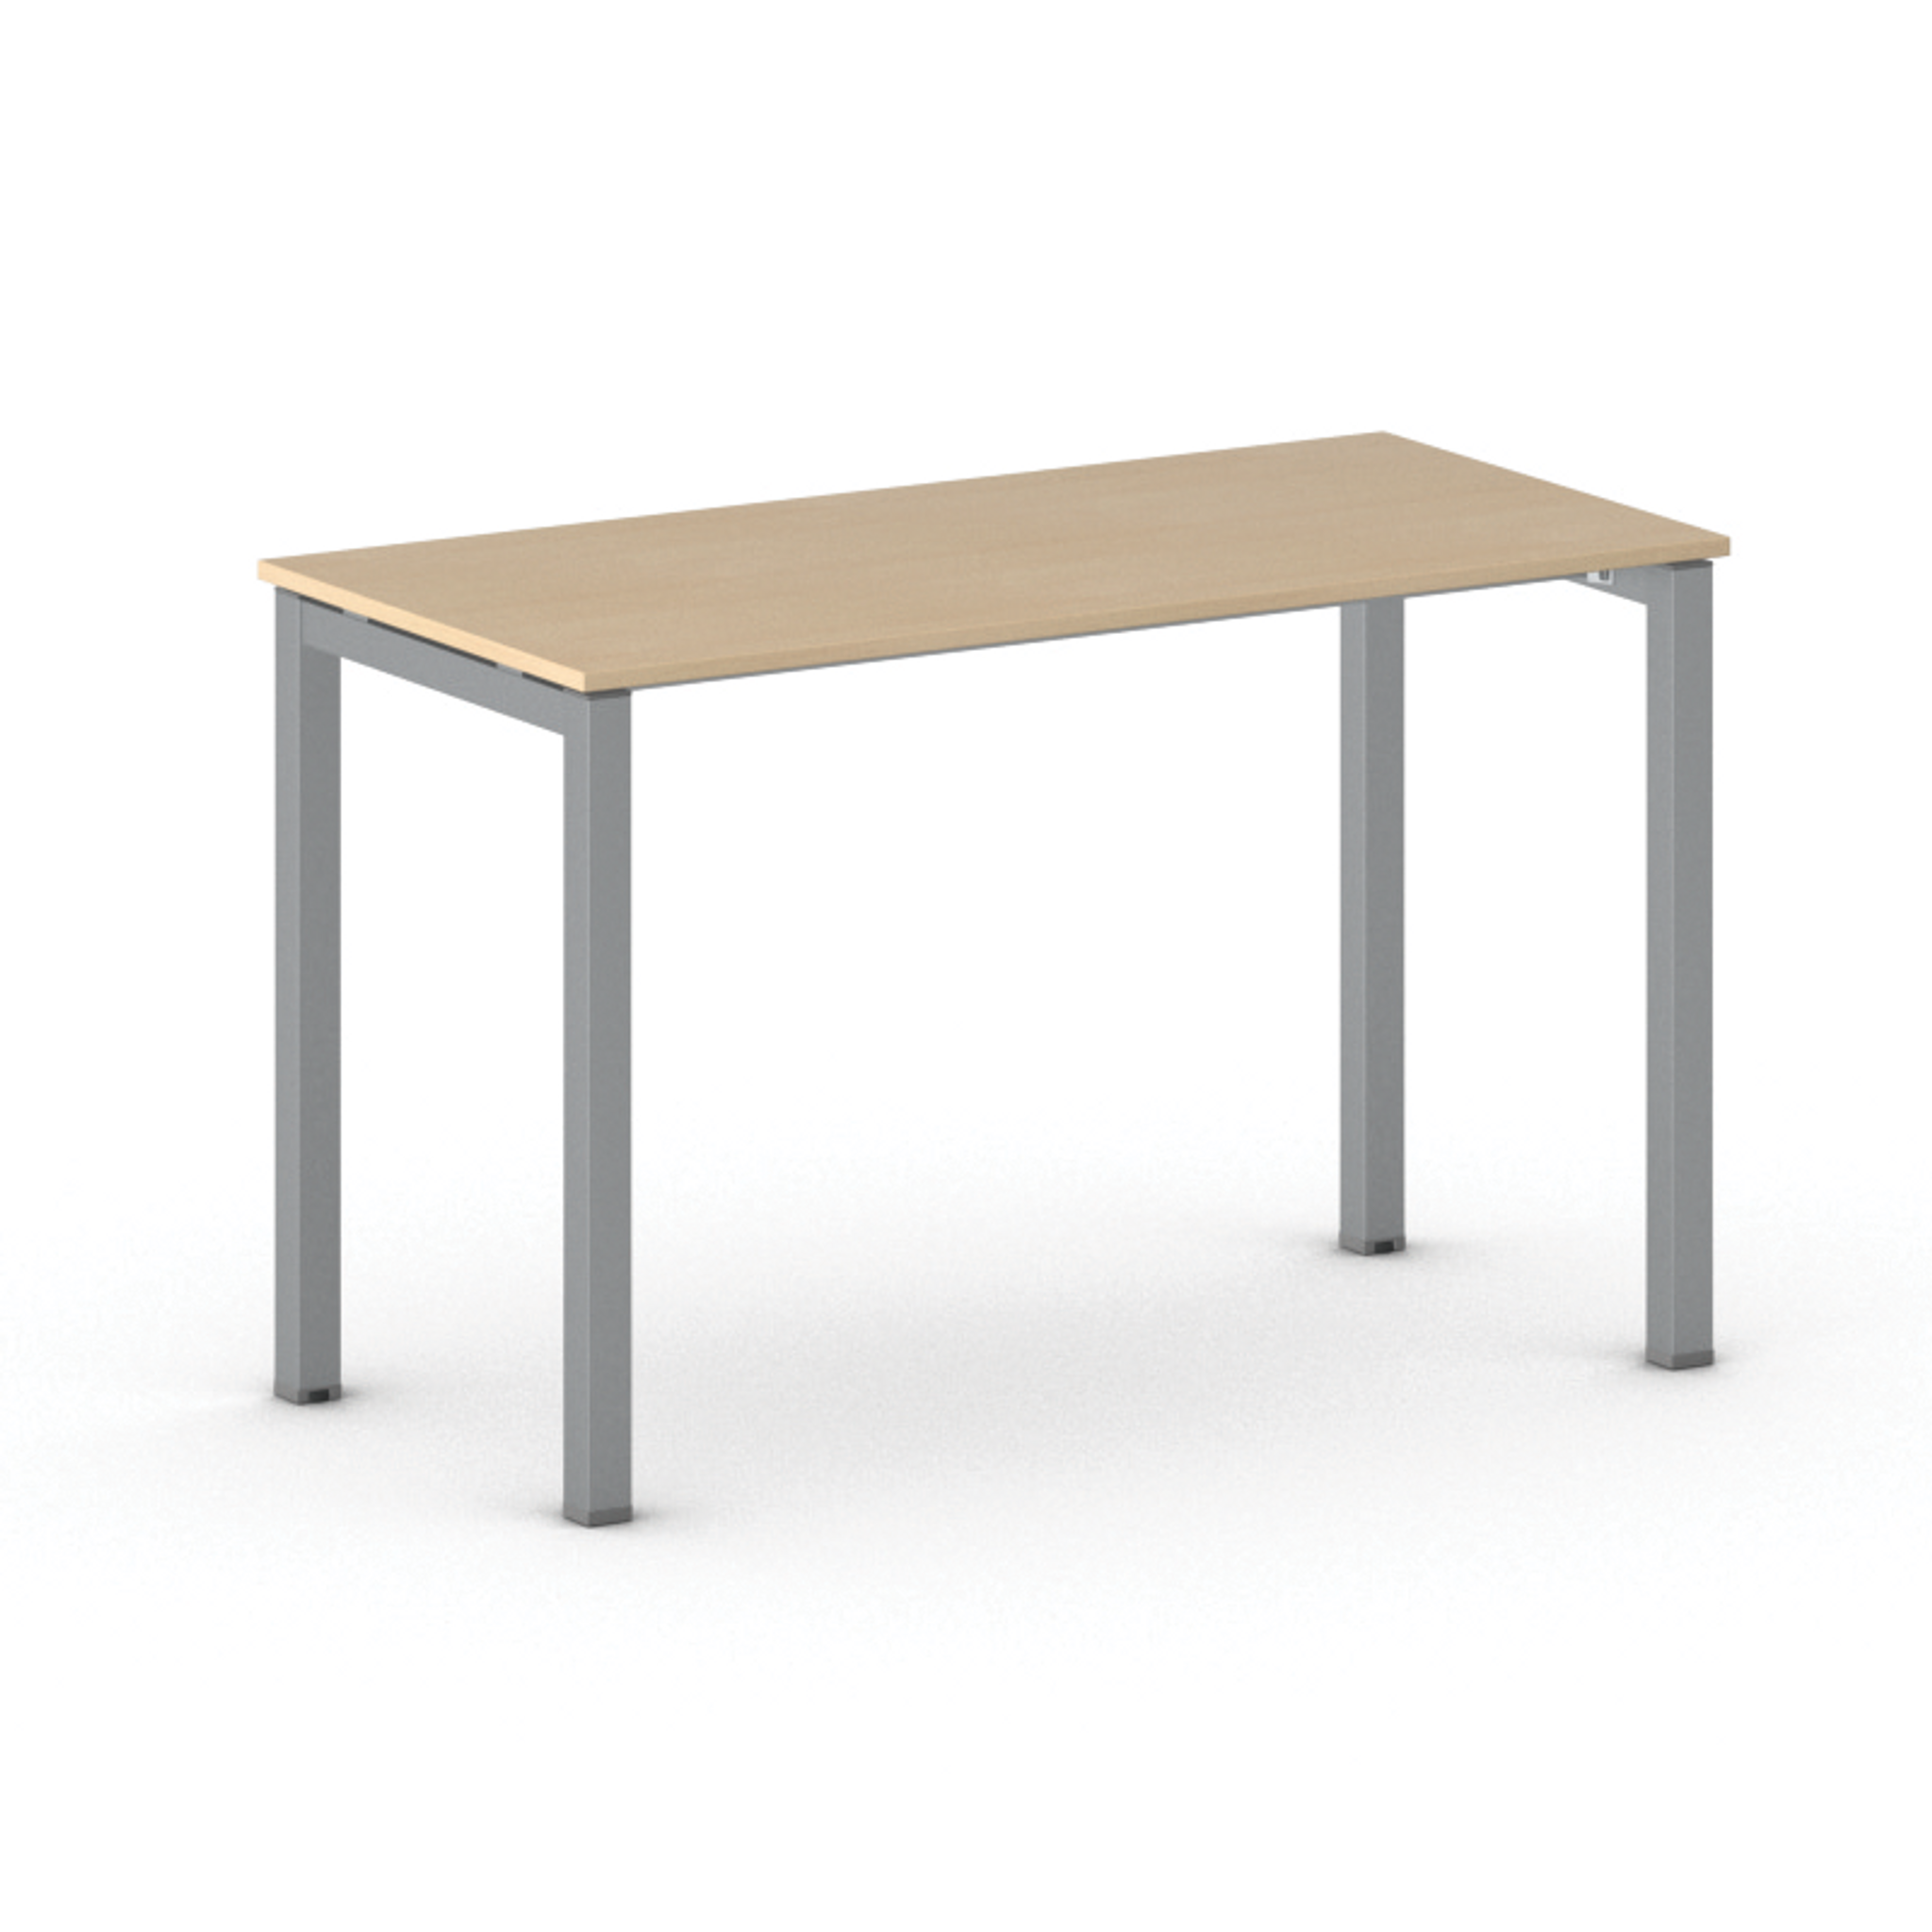 Stół PRIMO SQUARE 1200 x 600 x 750 mm, buk